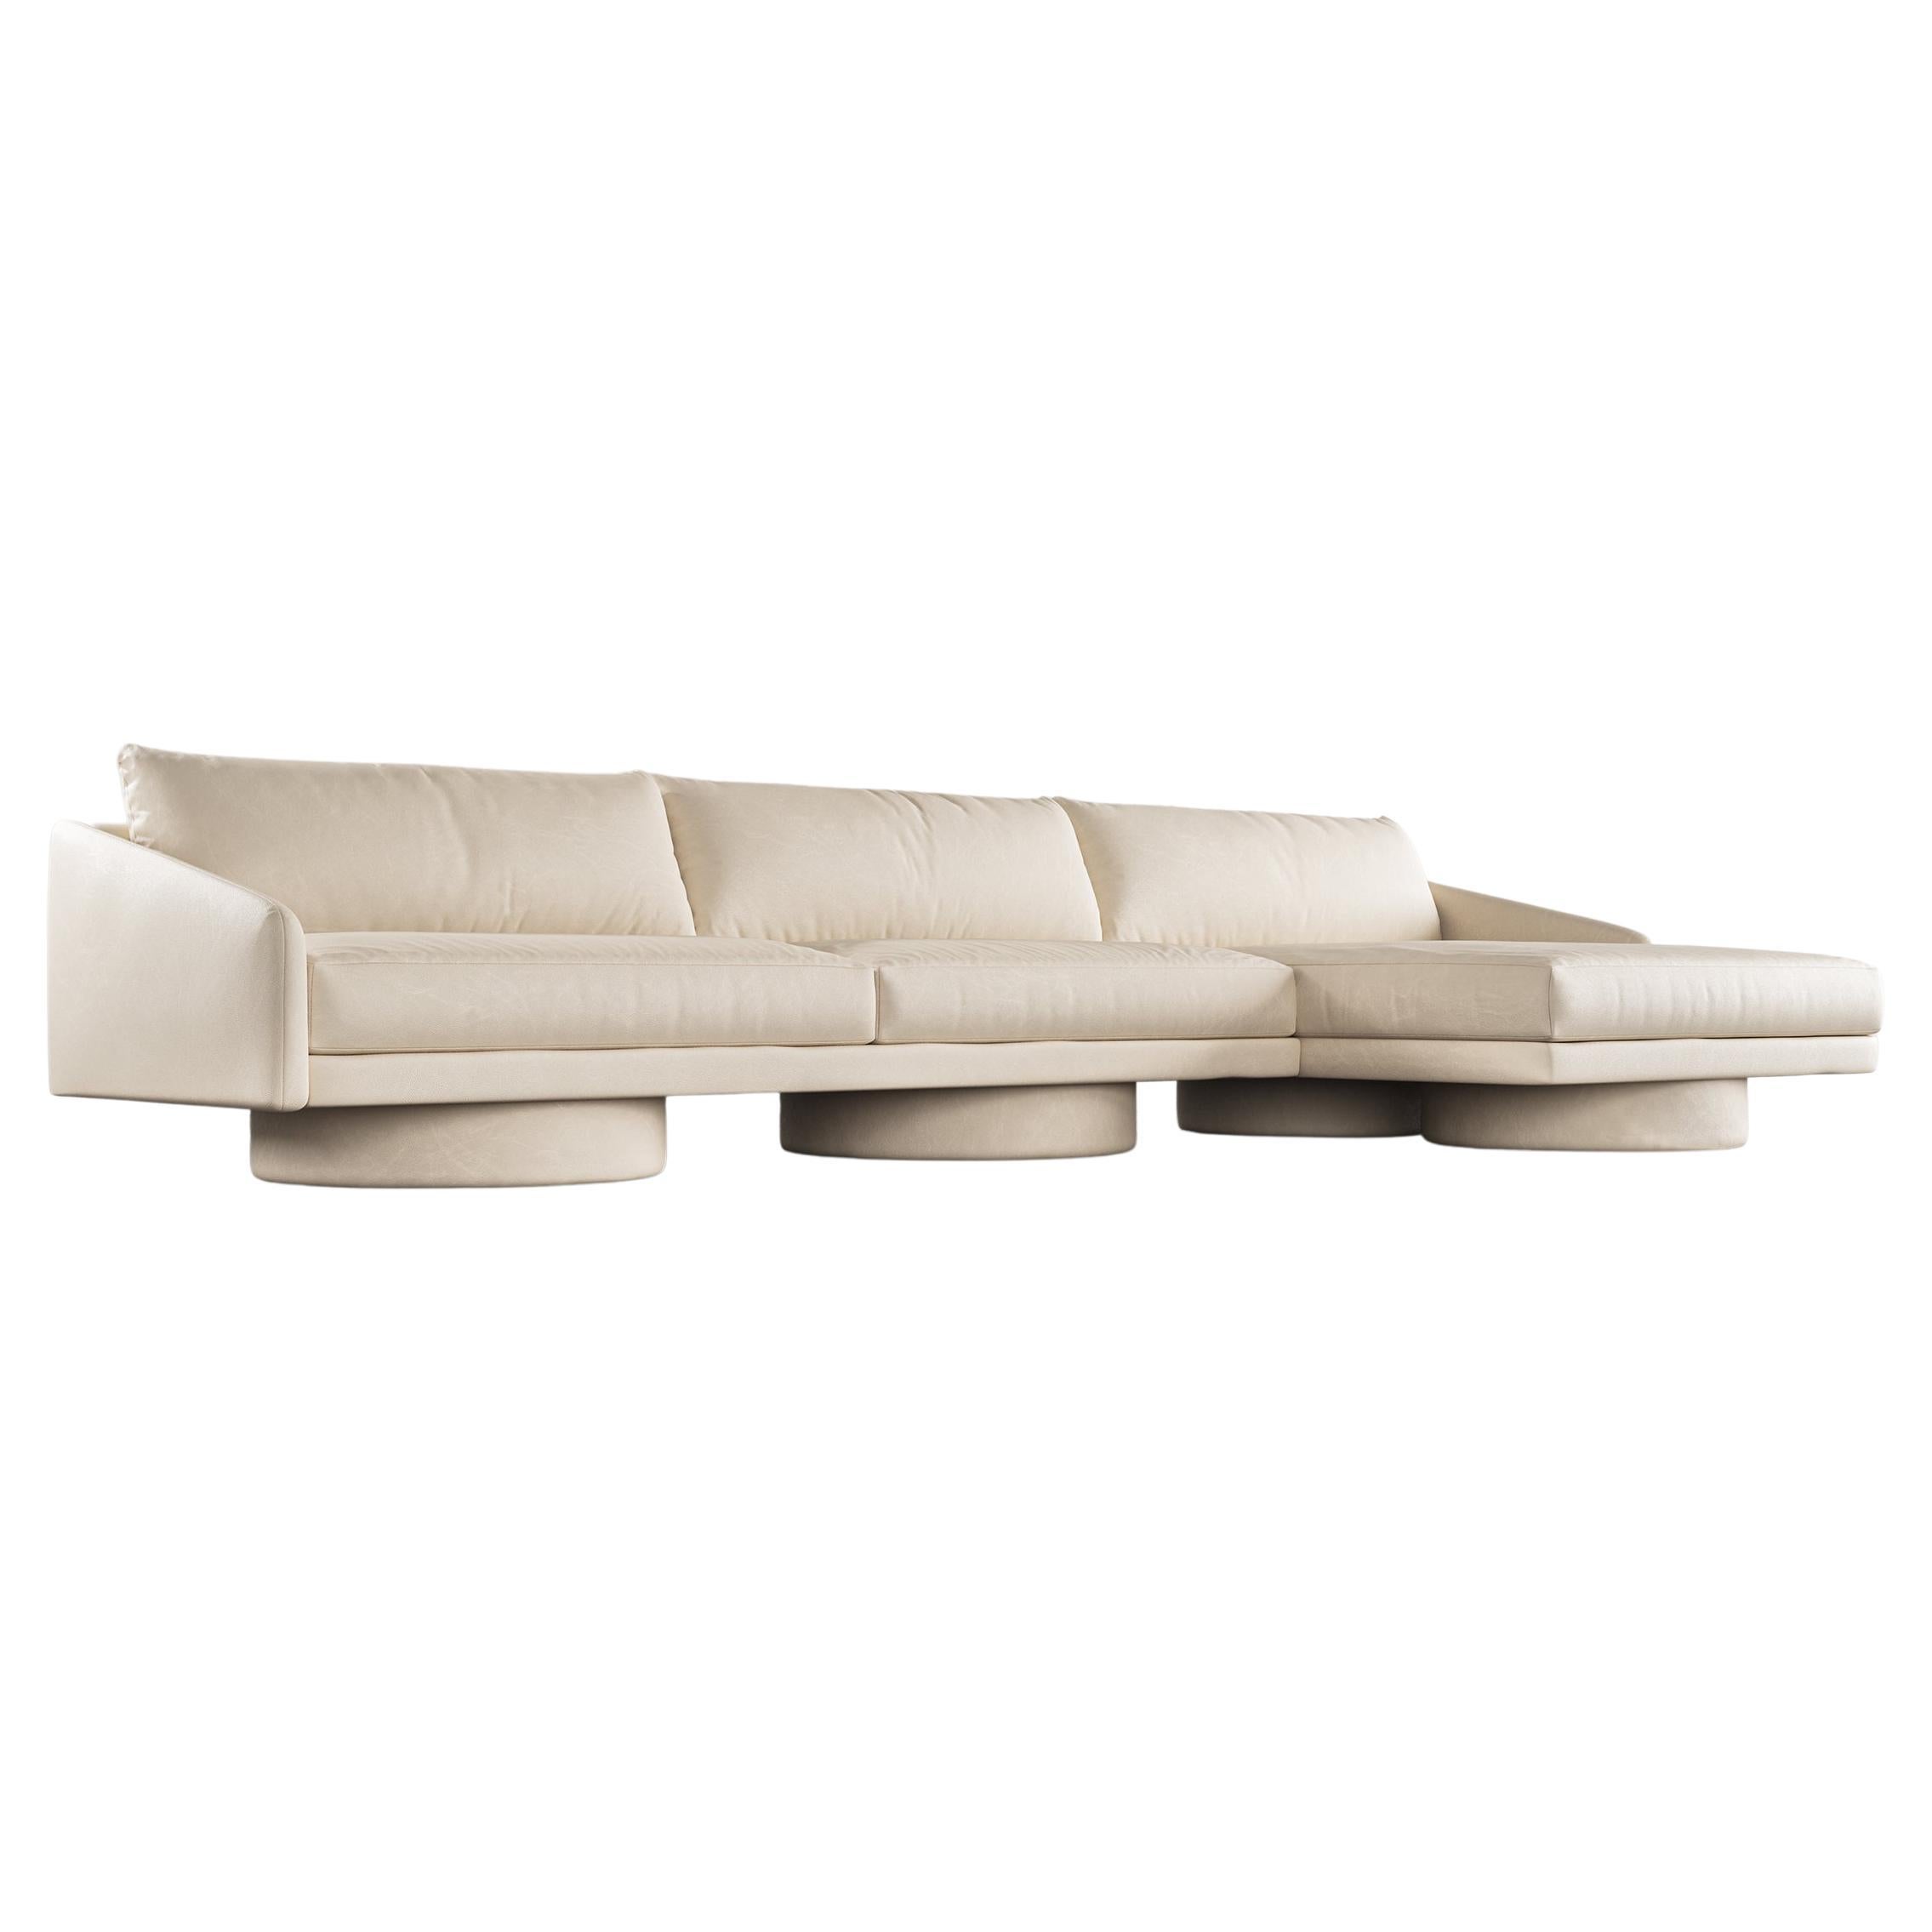 SURGE SECTIONAL – Modernes Sofa mit Untergestell aus cremefarbenem Kunstleder